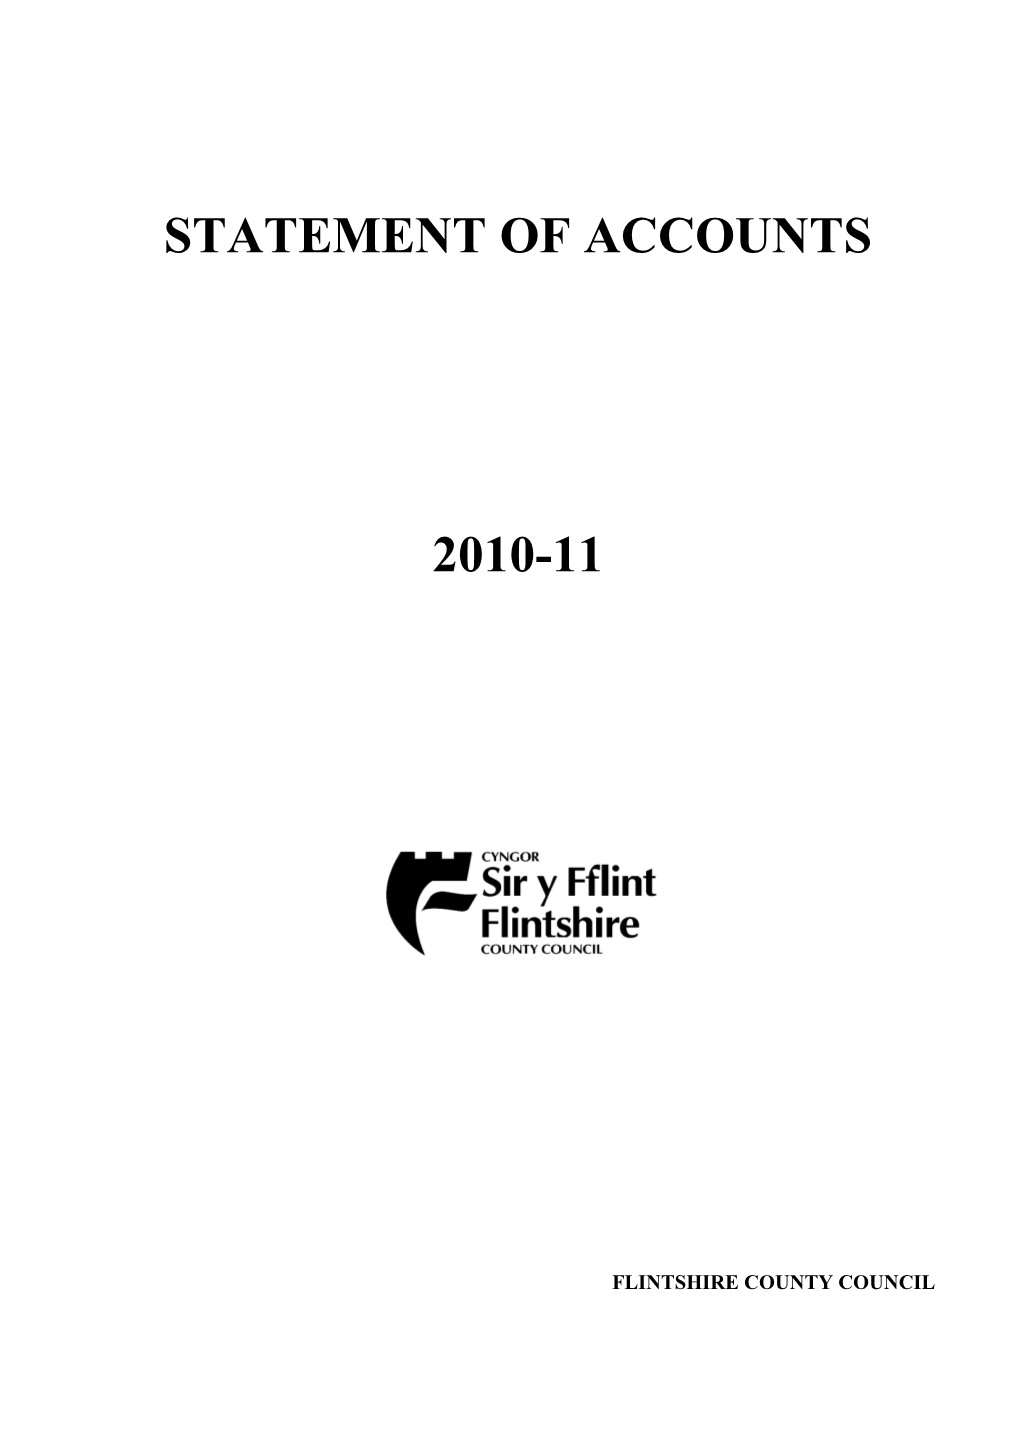 Statement of Accounts 2010-11